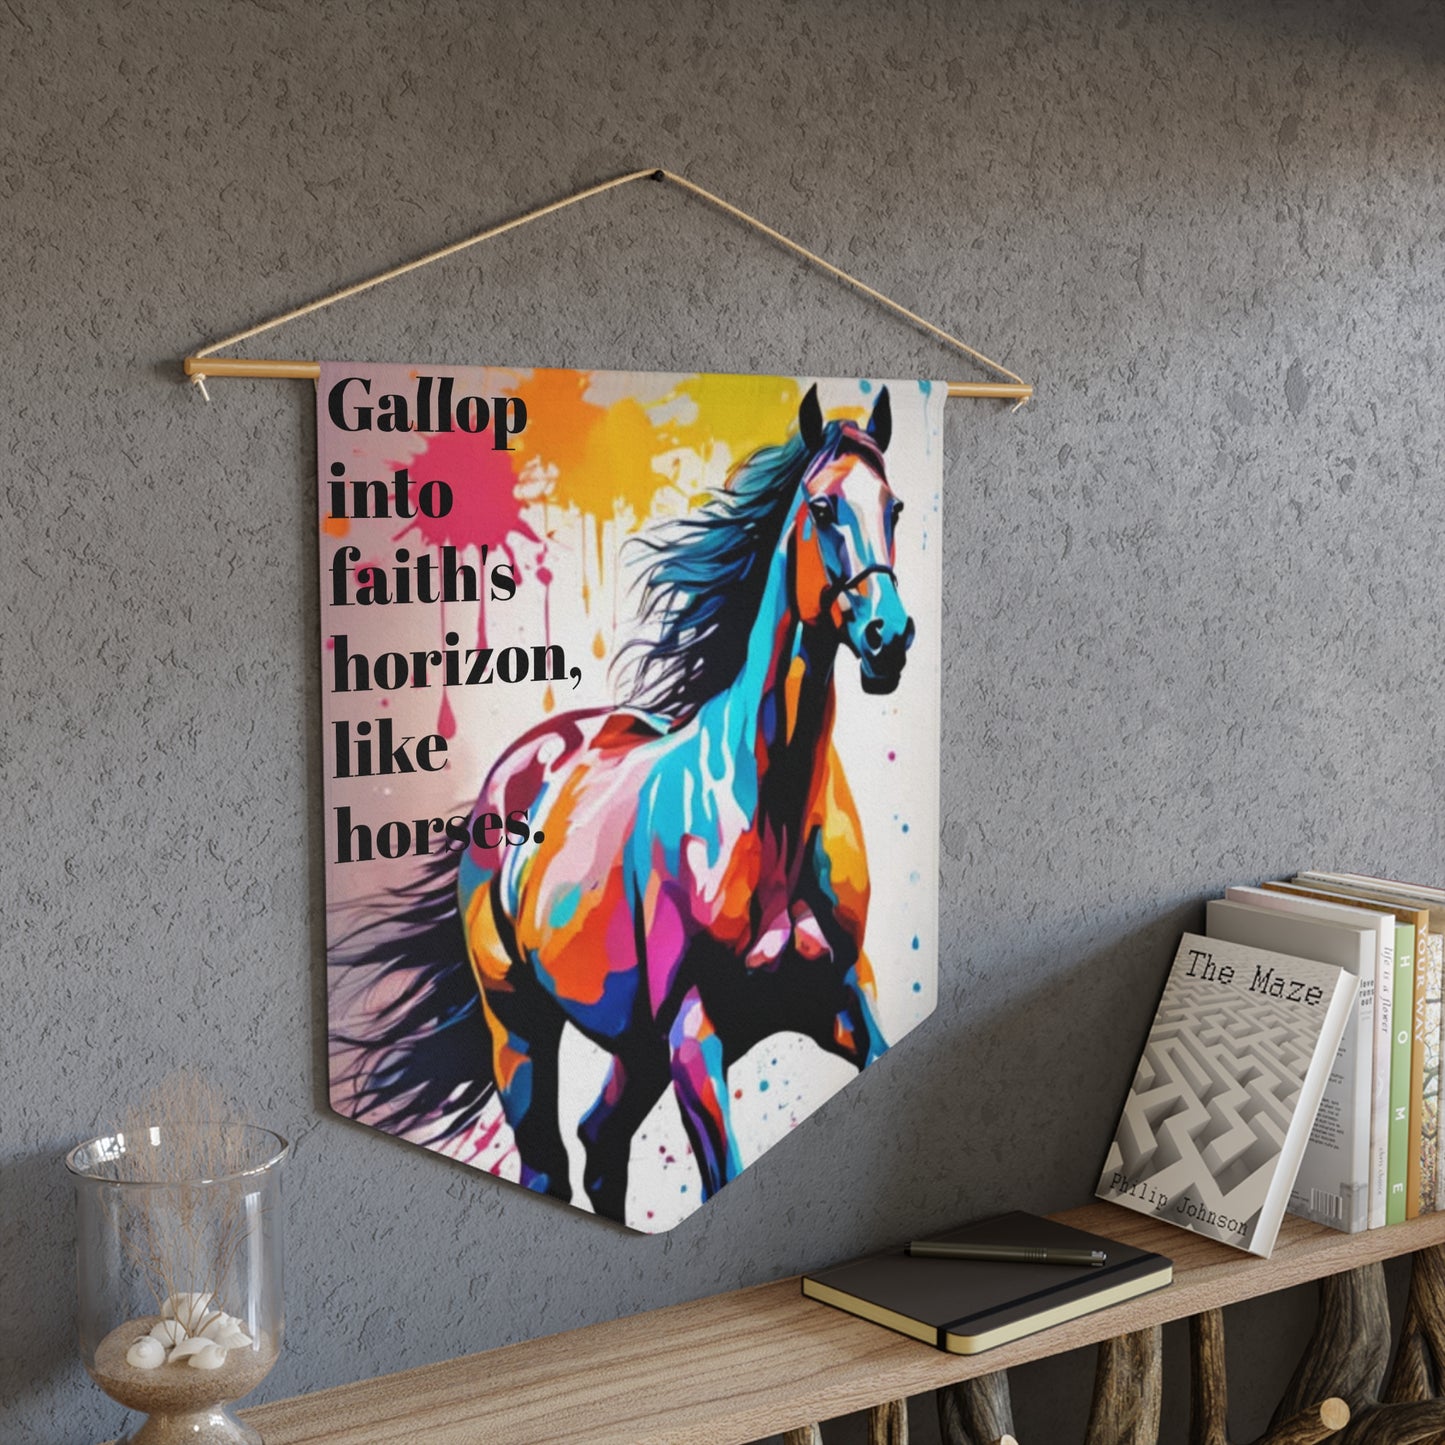 Gallop into faith's horizon, like horses. Pennant wall art for home decor